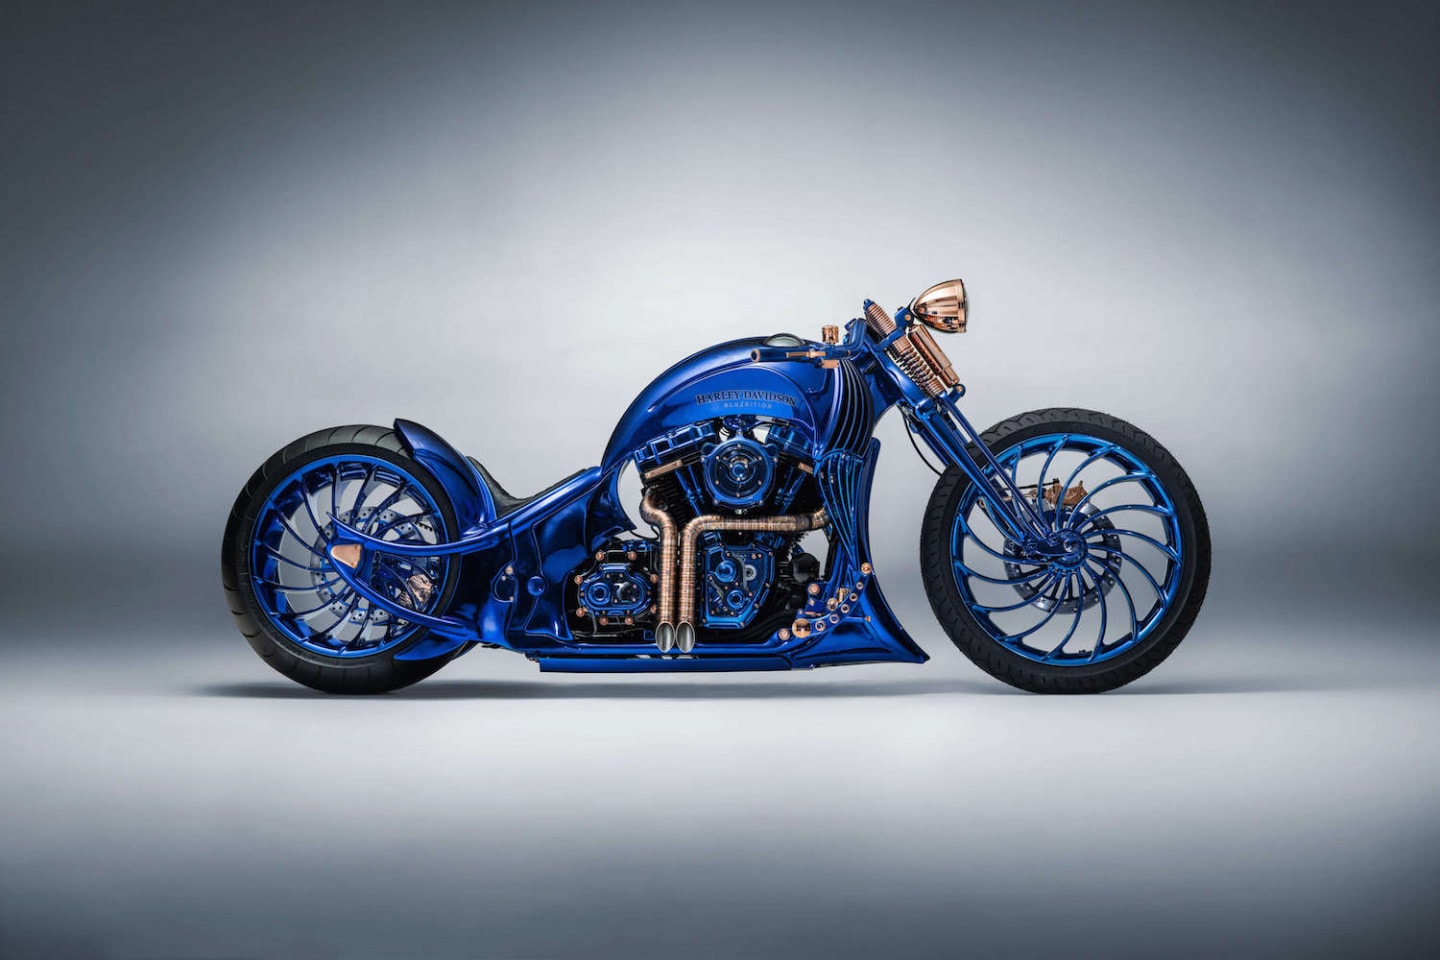 Bucherer Bundnerbike Harley Davidson Blue Edition Motorcycle 1 79 million dollars usd bike